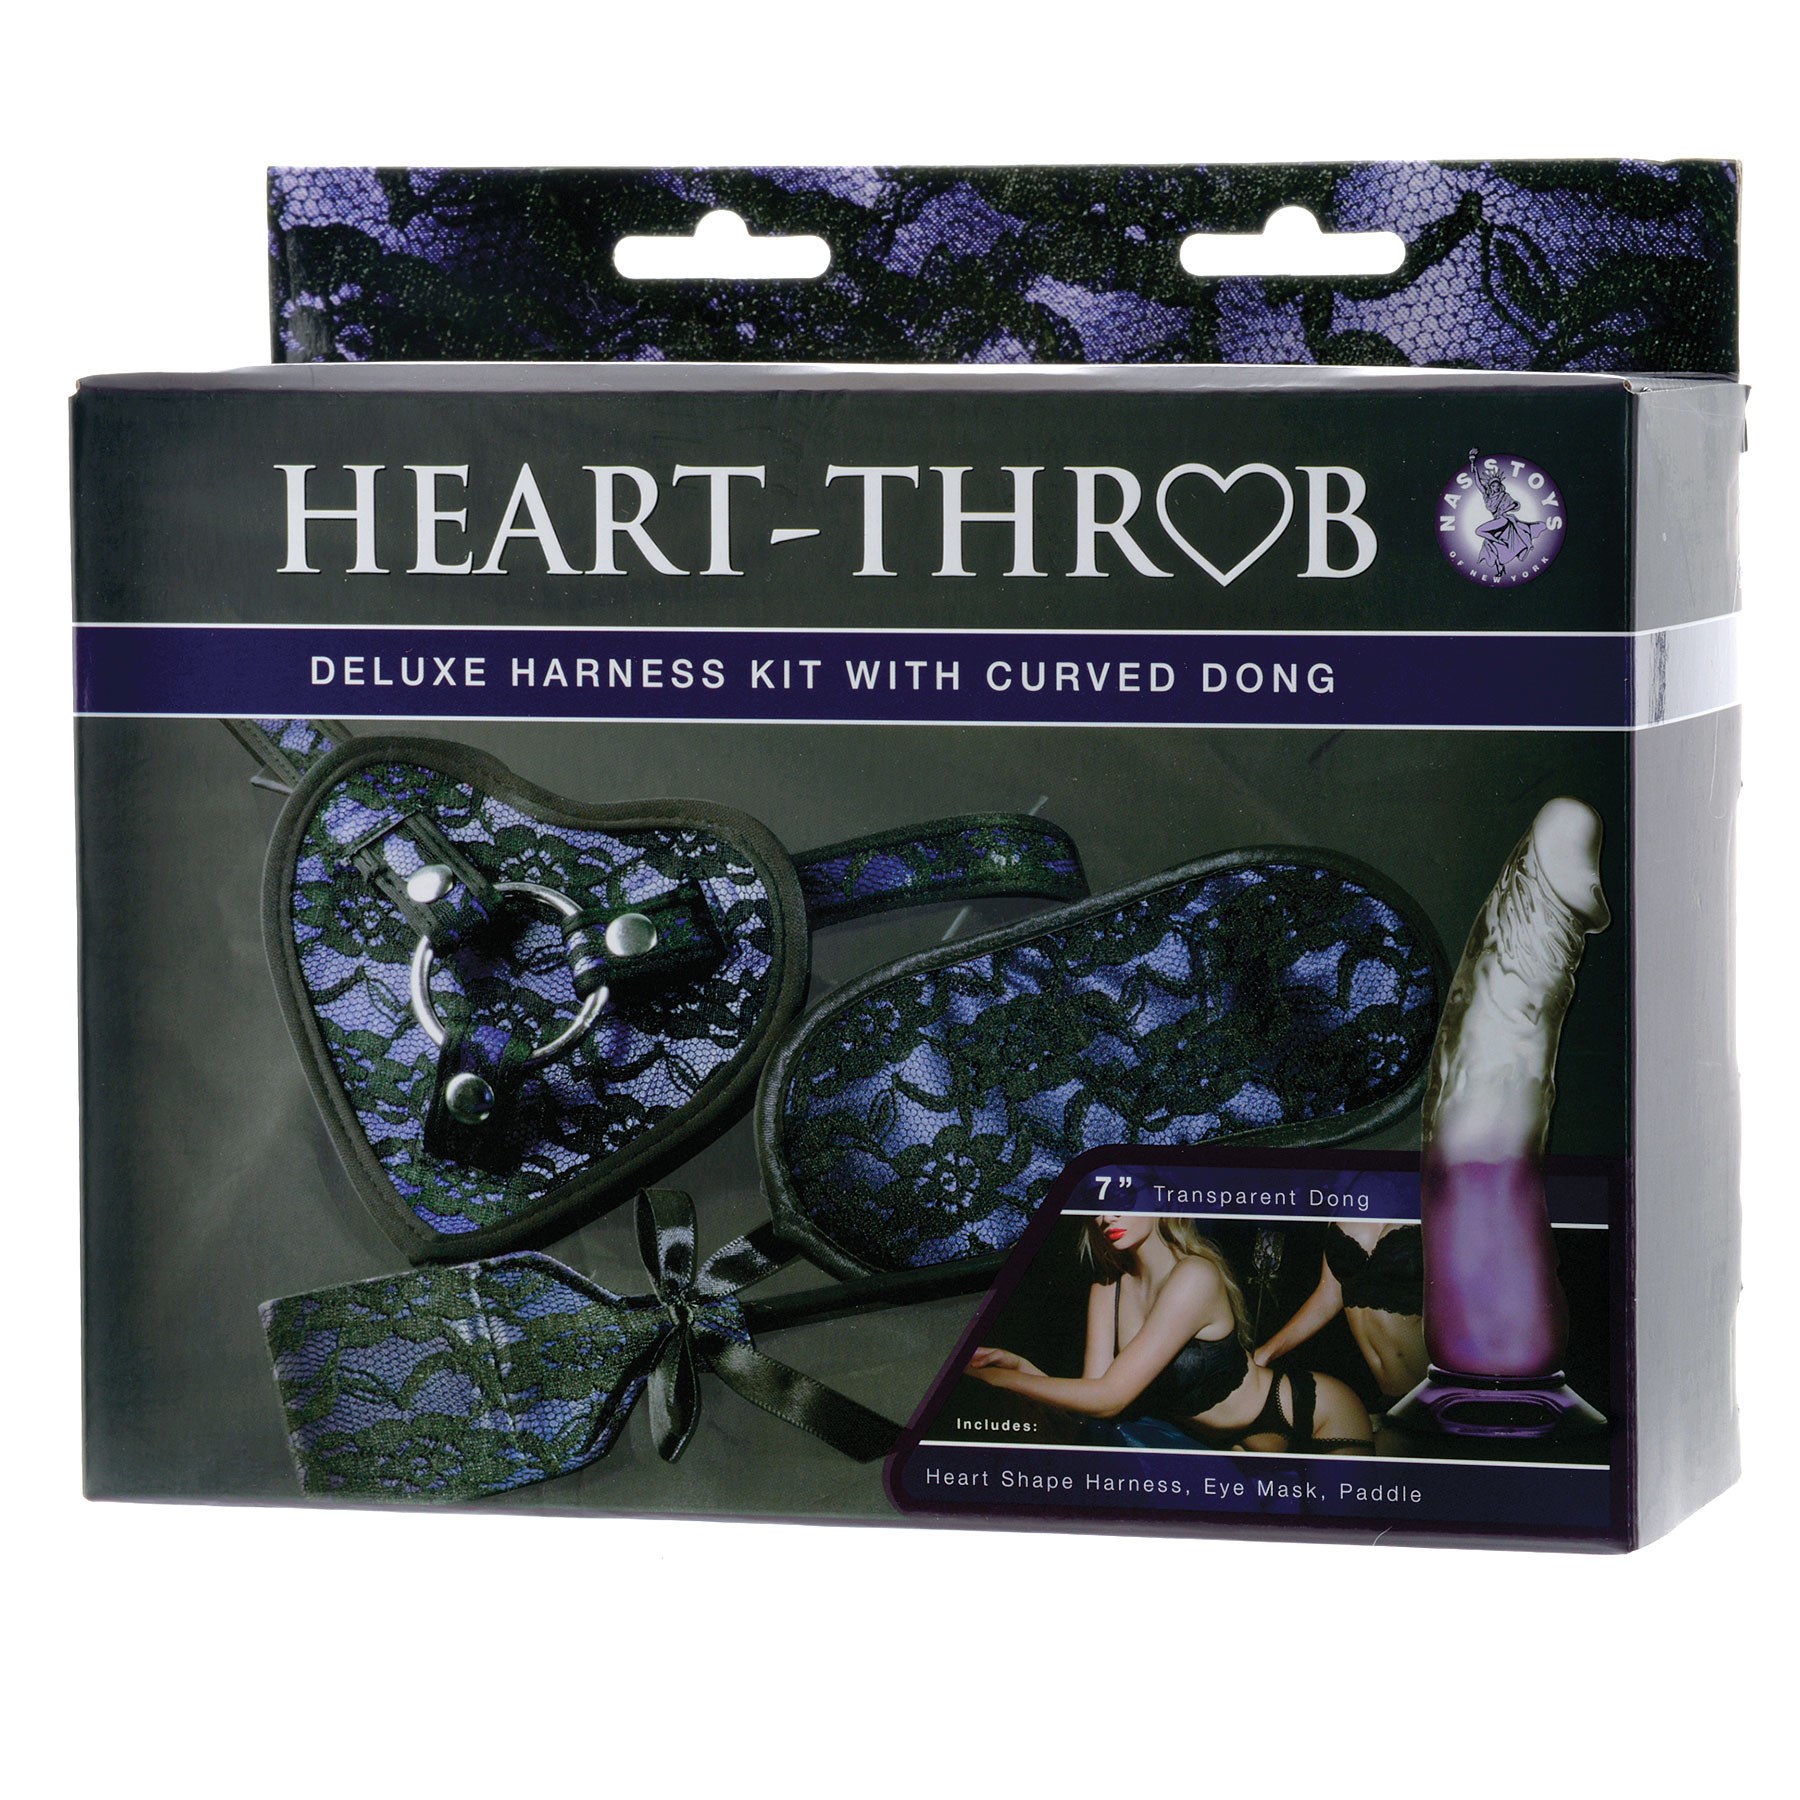 Heart-Throb Deluxe Harness Kit box